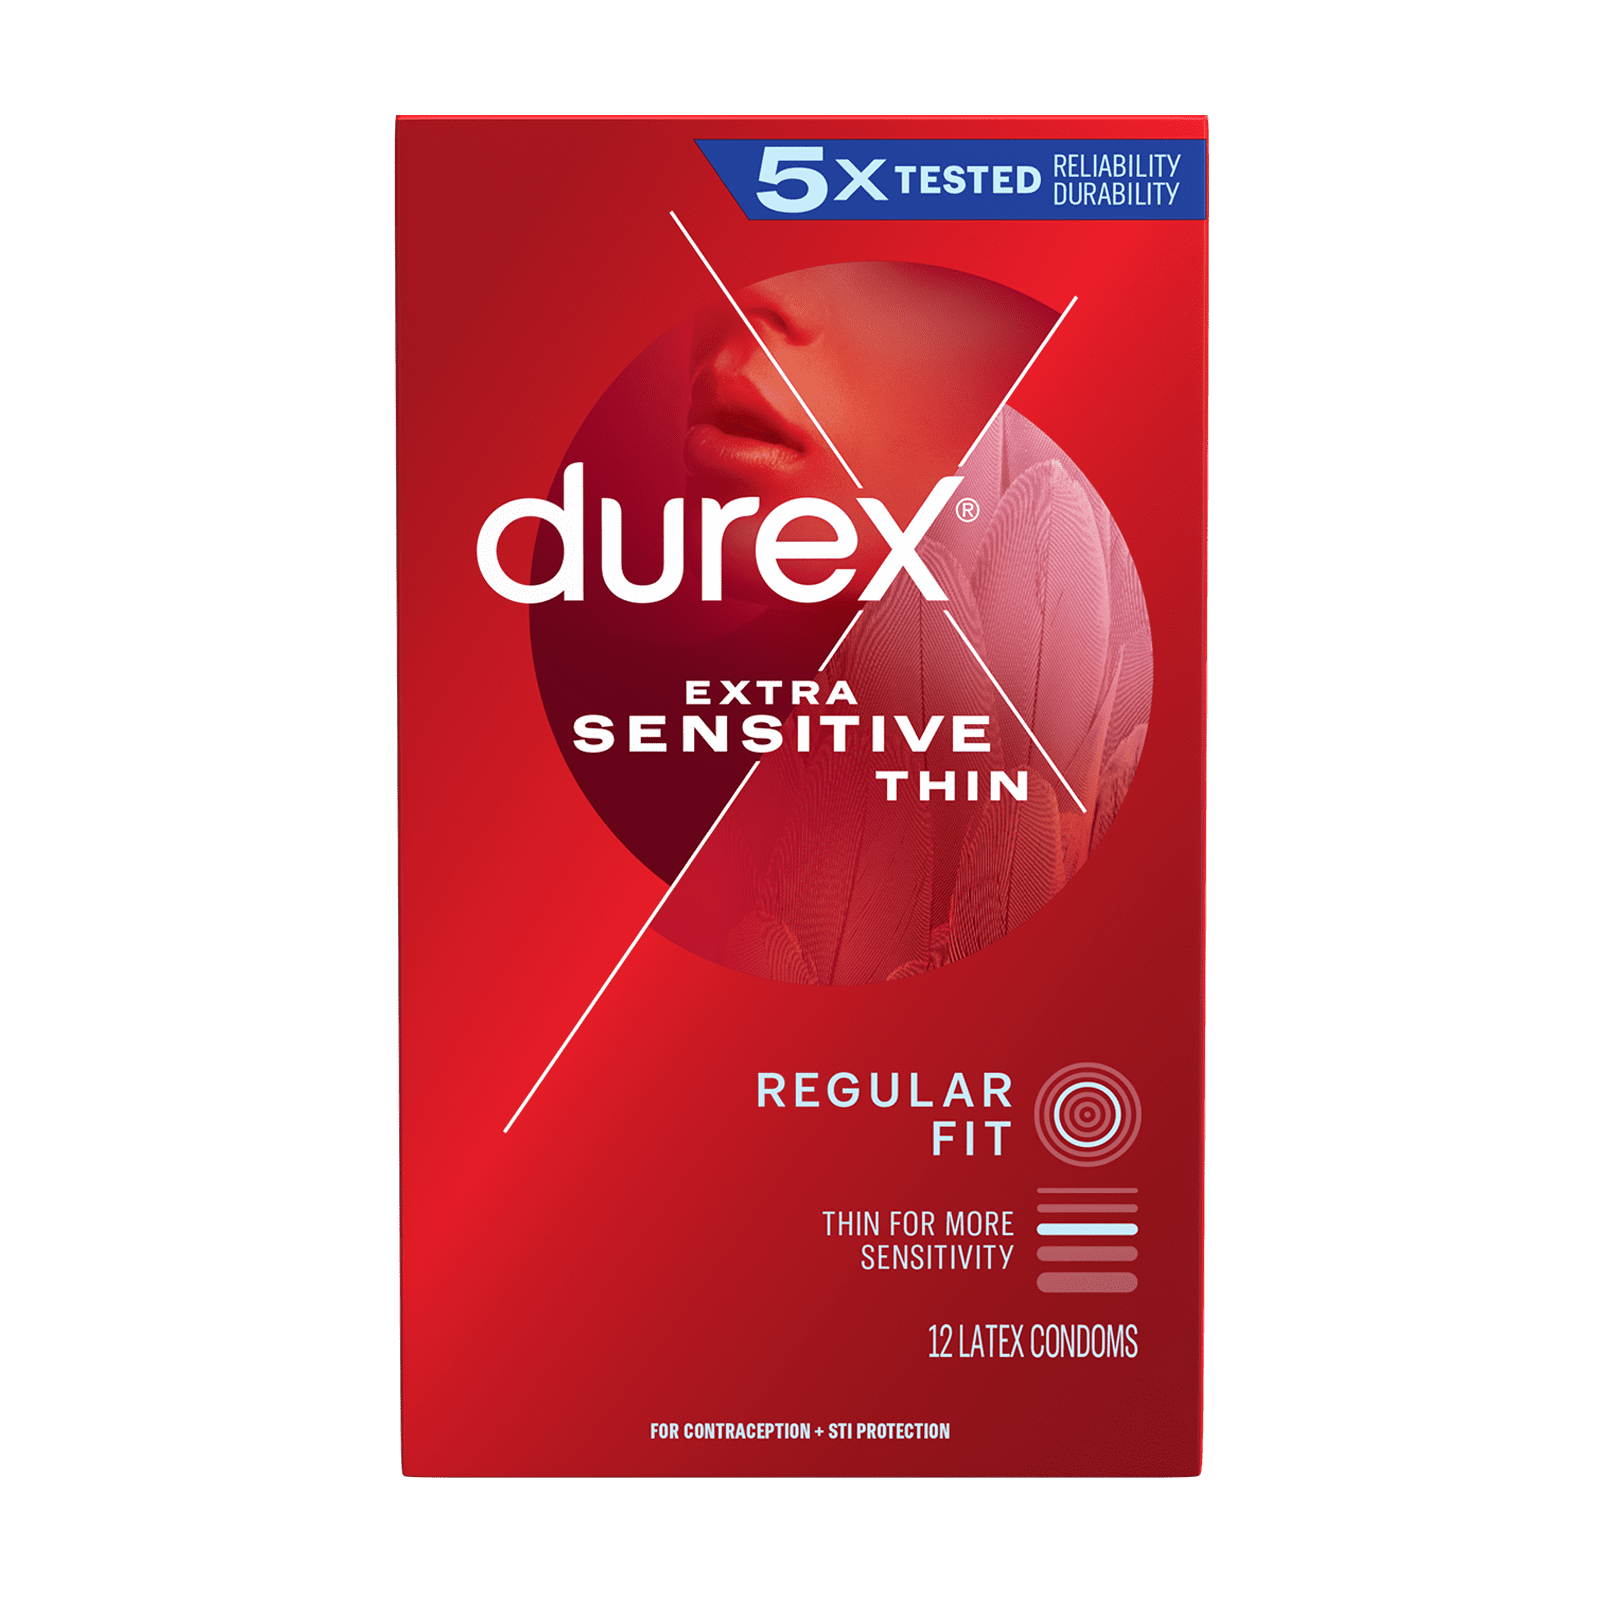 Durex Play Little Devil - Vibrating Ring in Pakistan